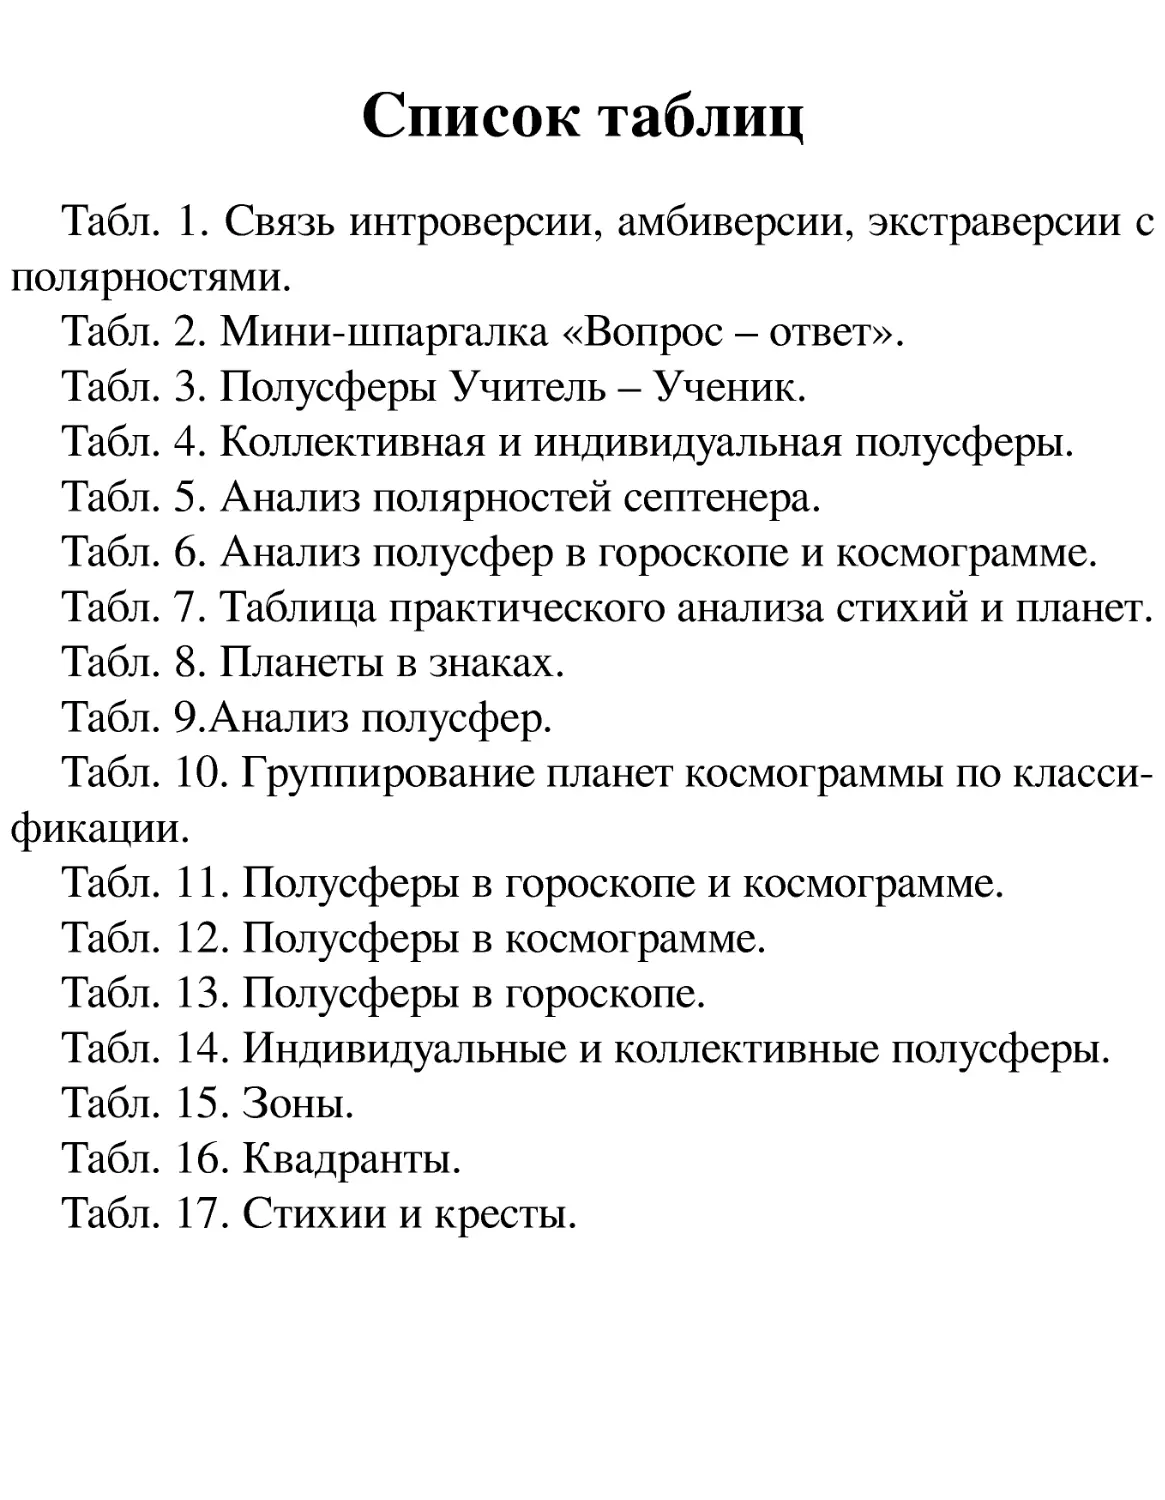 Список таблиц